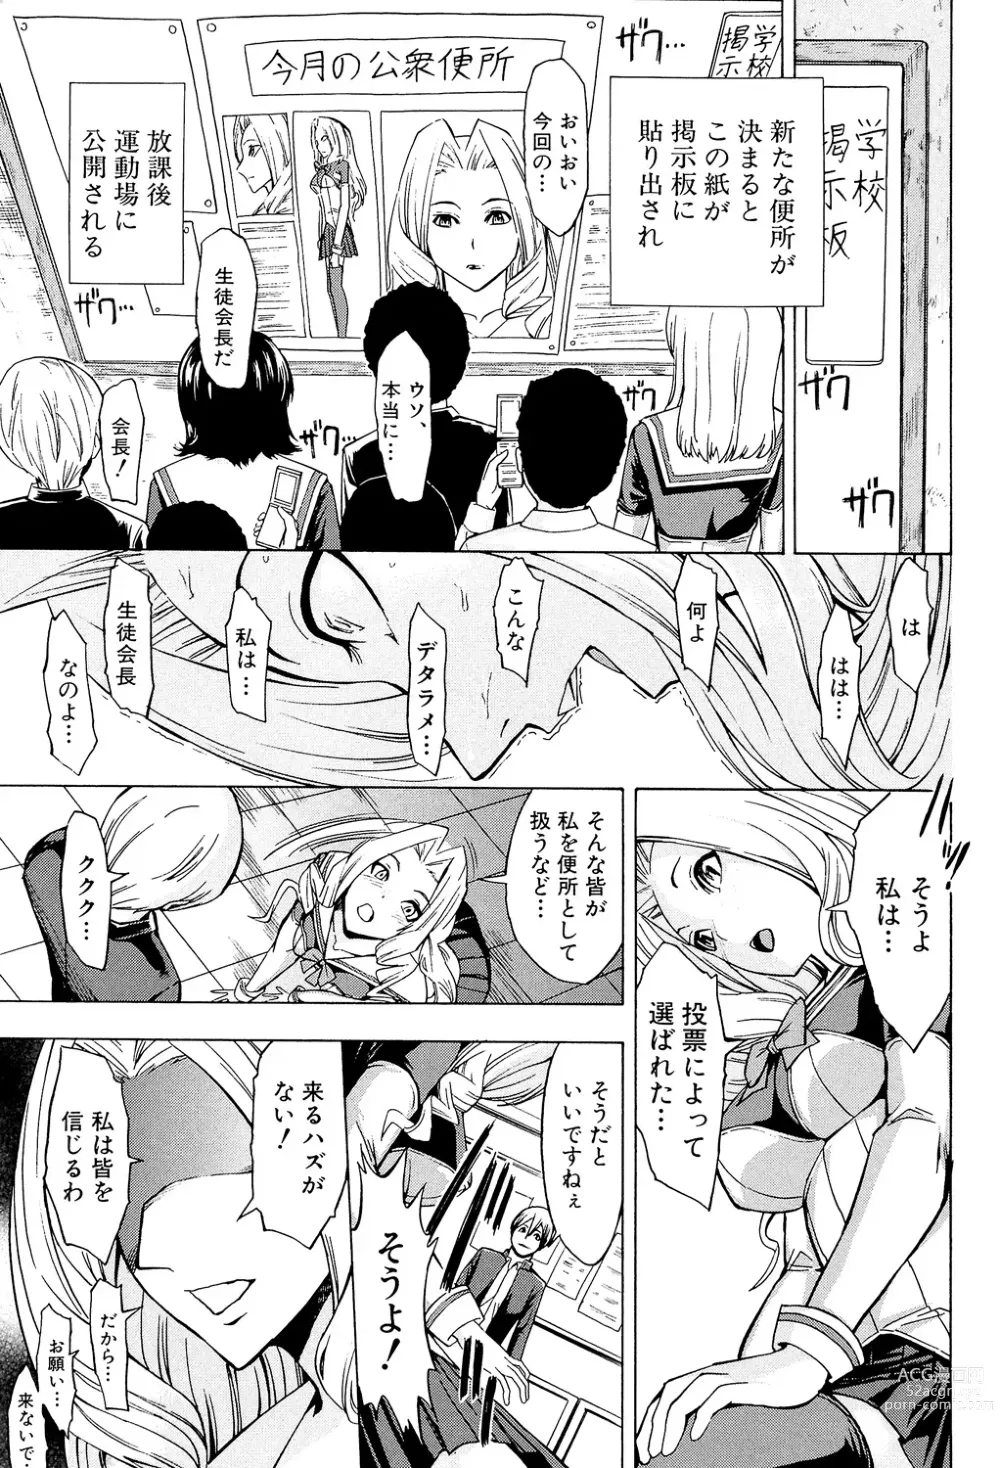 Page 9 of manga Koukai Benjo